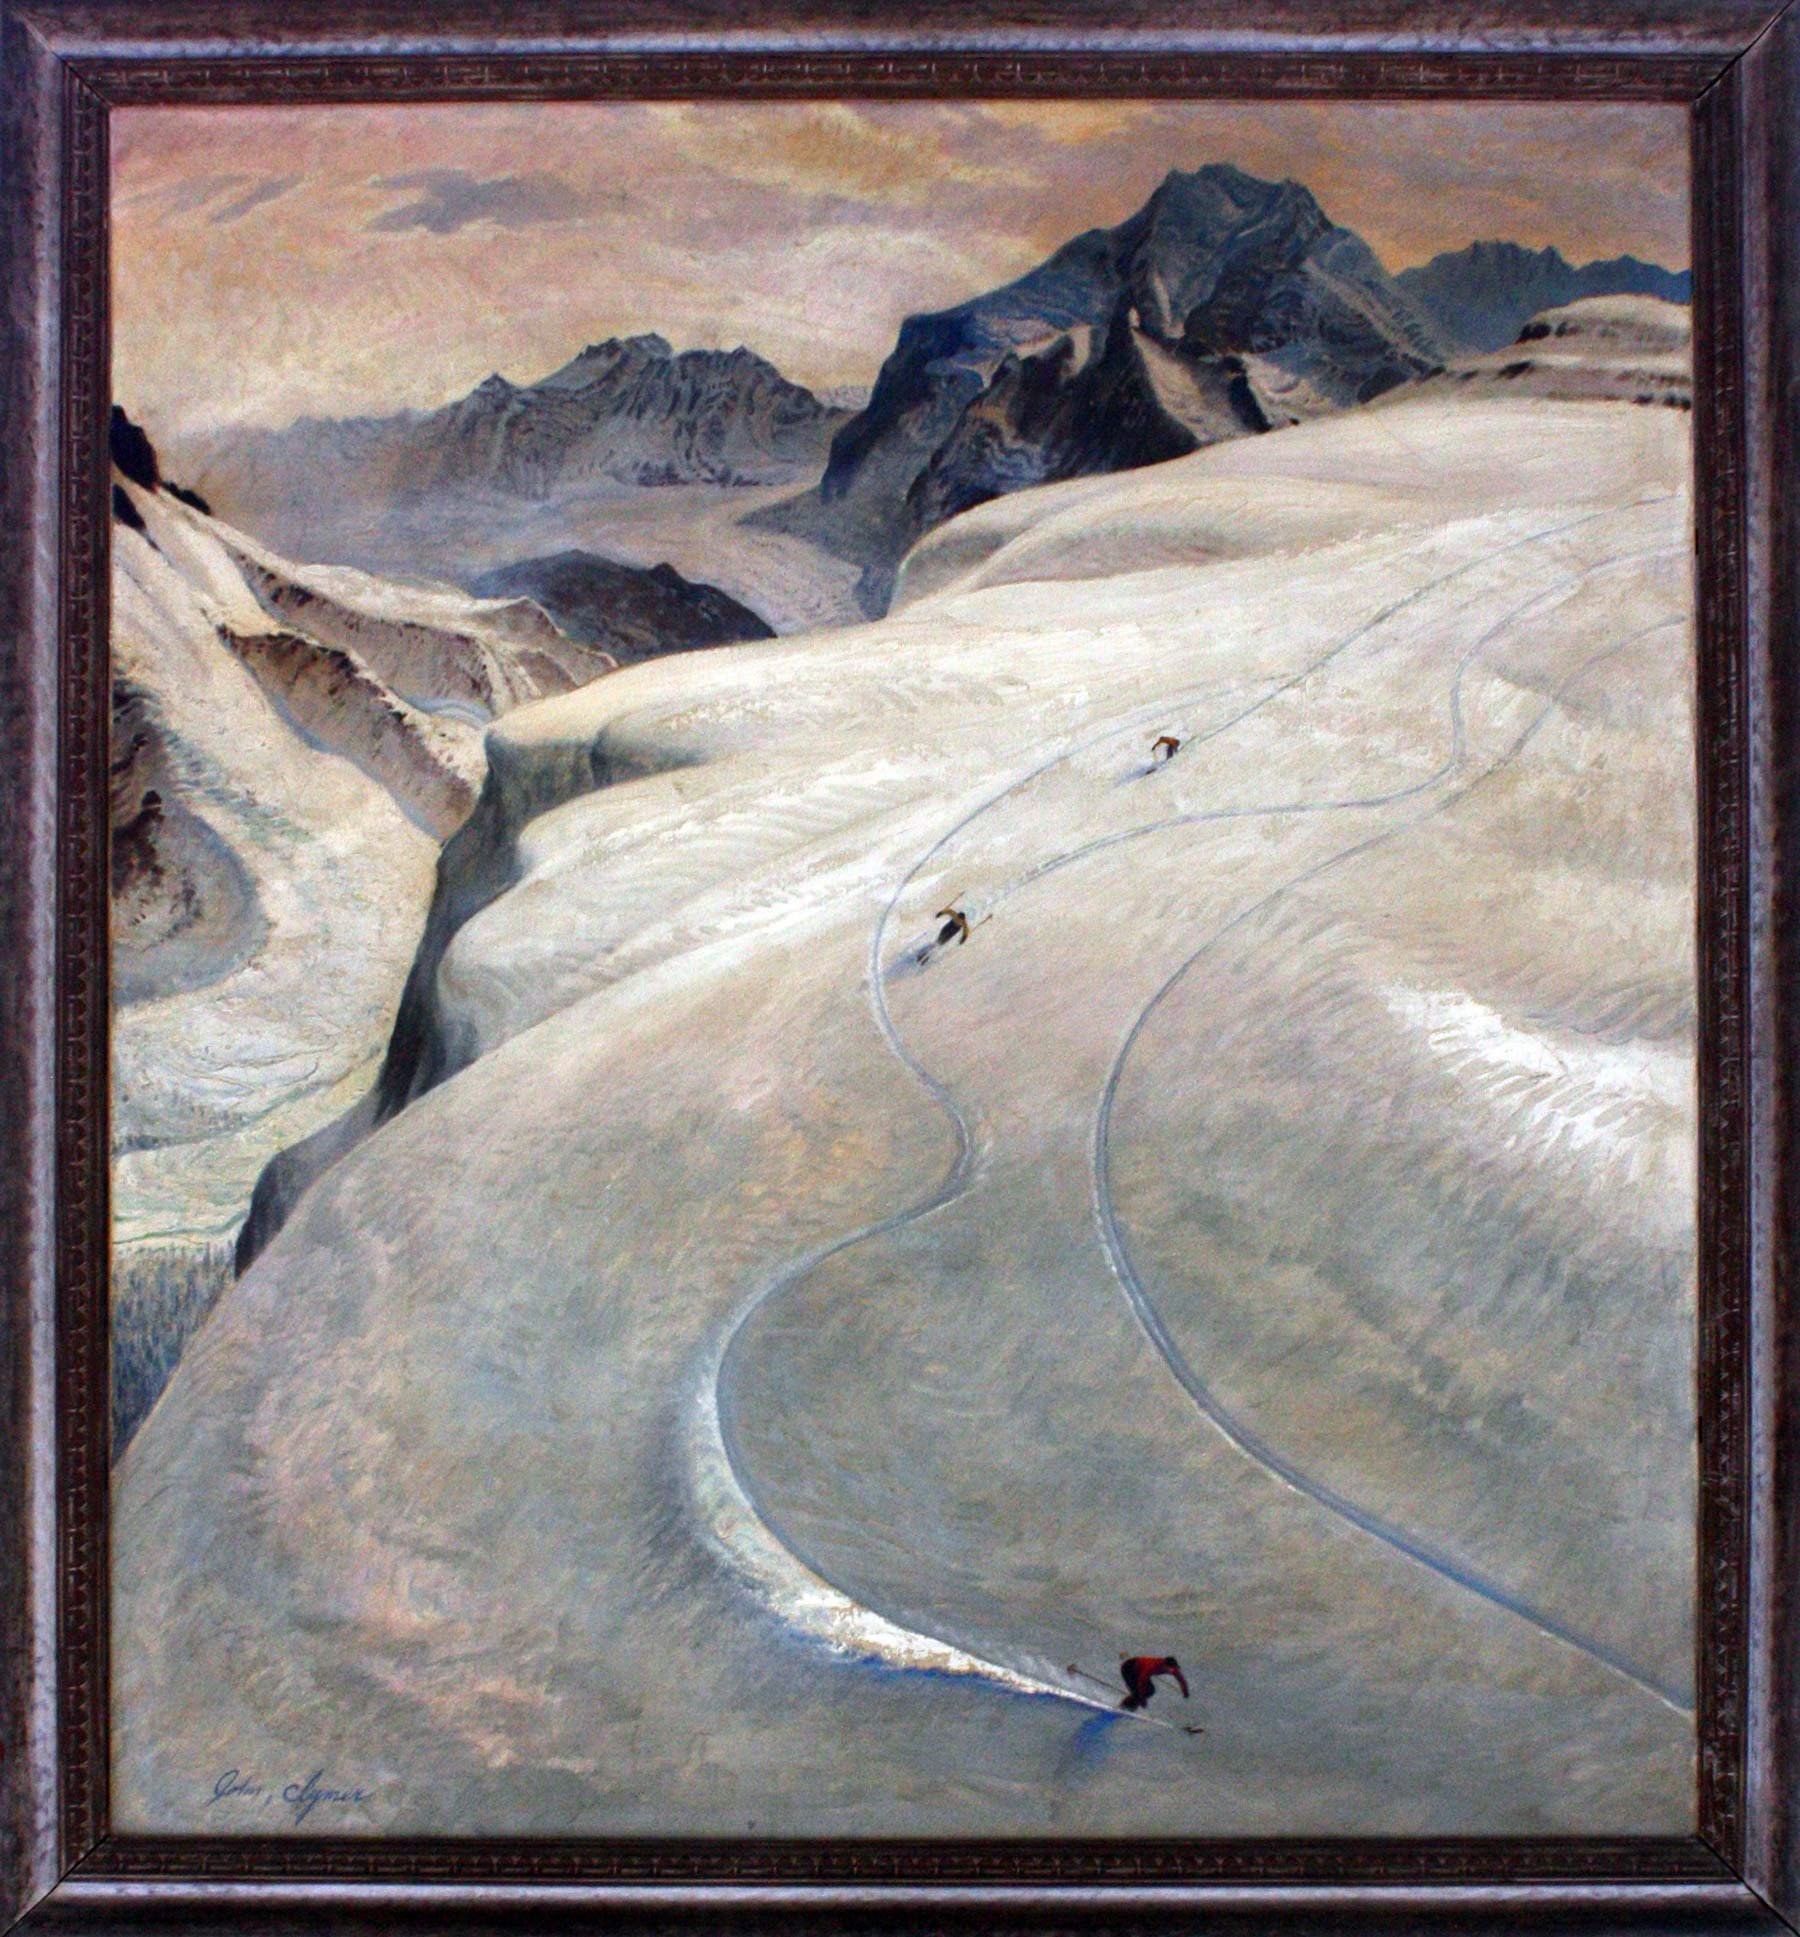   John Clymer (1907-1989)   Mountain Skiing  1948, oil on canvas 40” x 36”, signed lower left  True Magazine,  November 1948 cover 